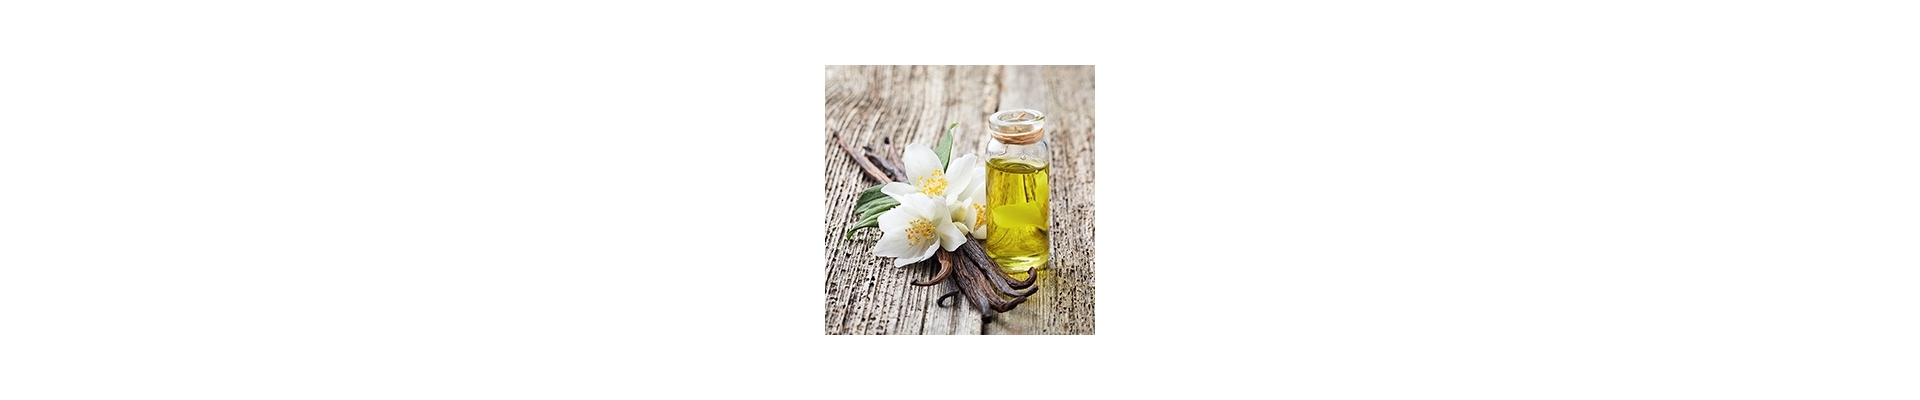 Flavour Oils for Cosmetics & Toiletries | The Soap Kitchen™